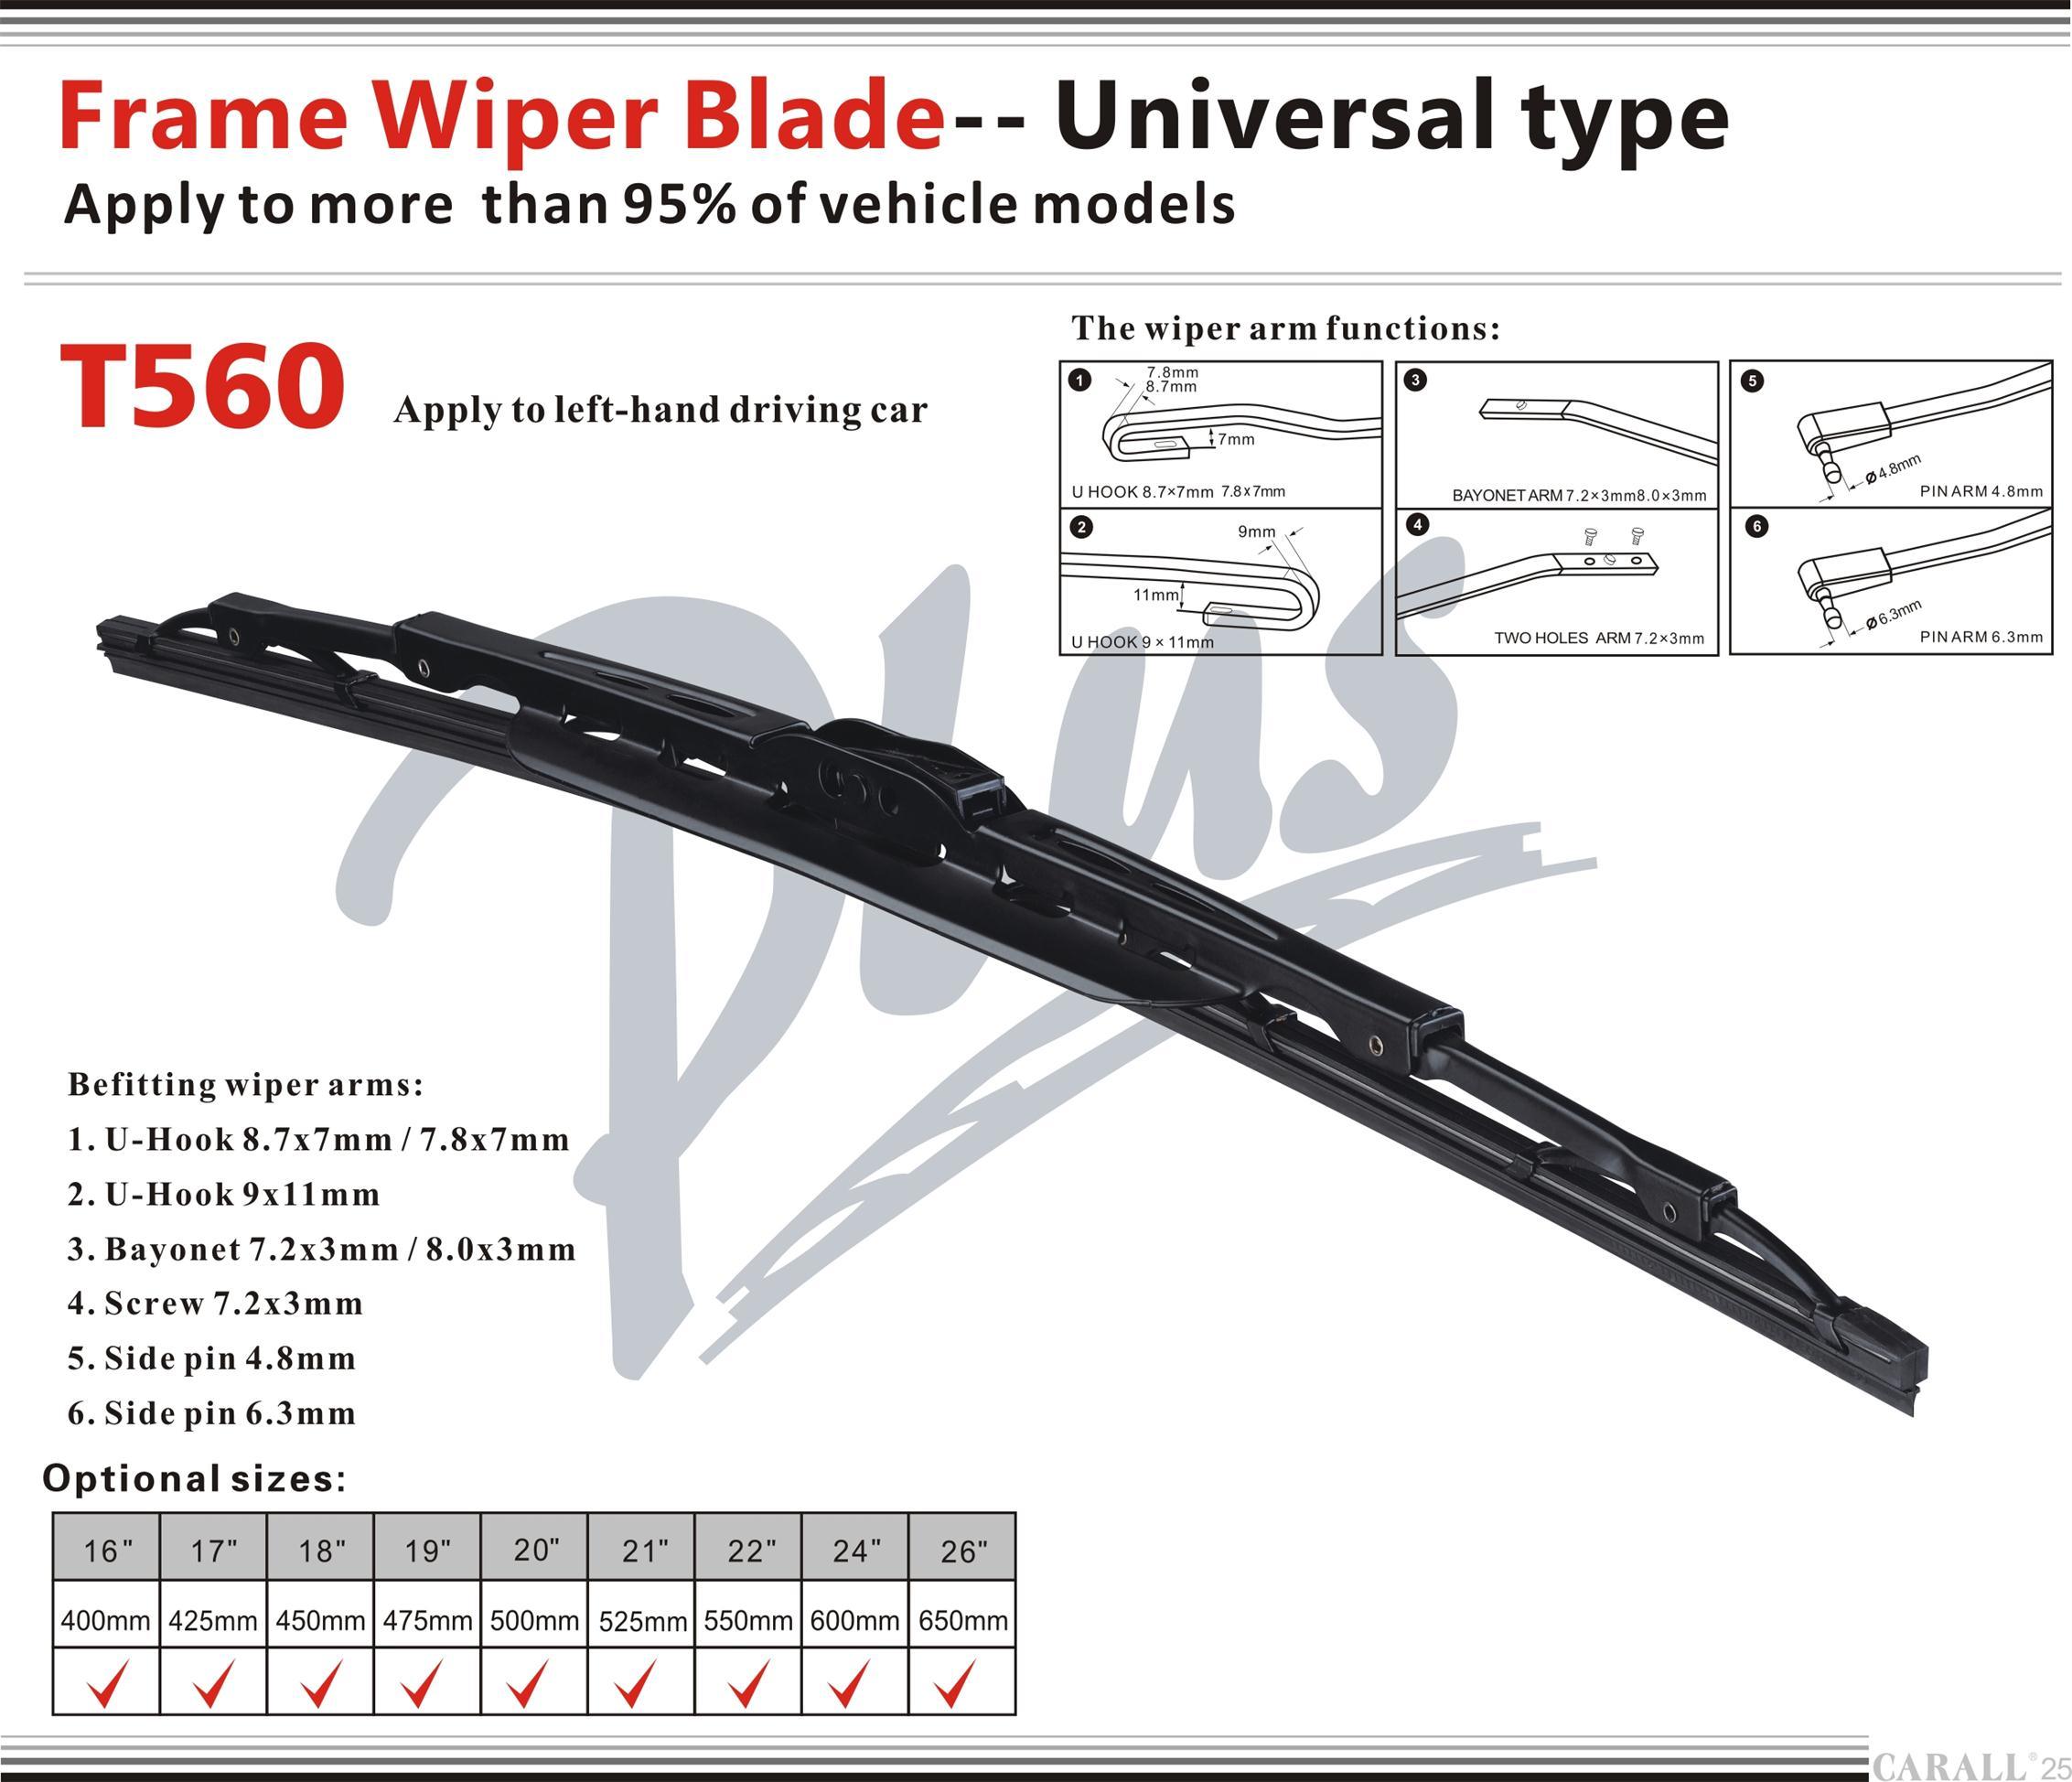 Universal Wiper Blade Frame Wiper Blade